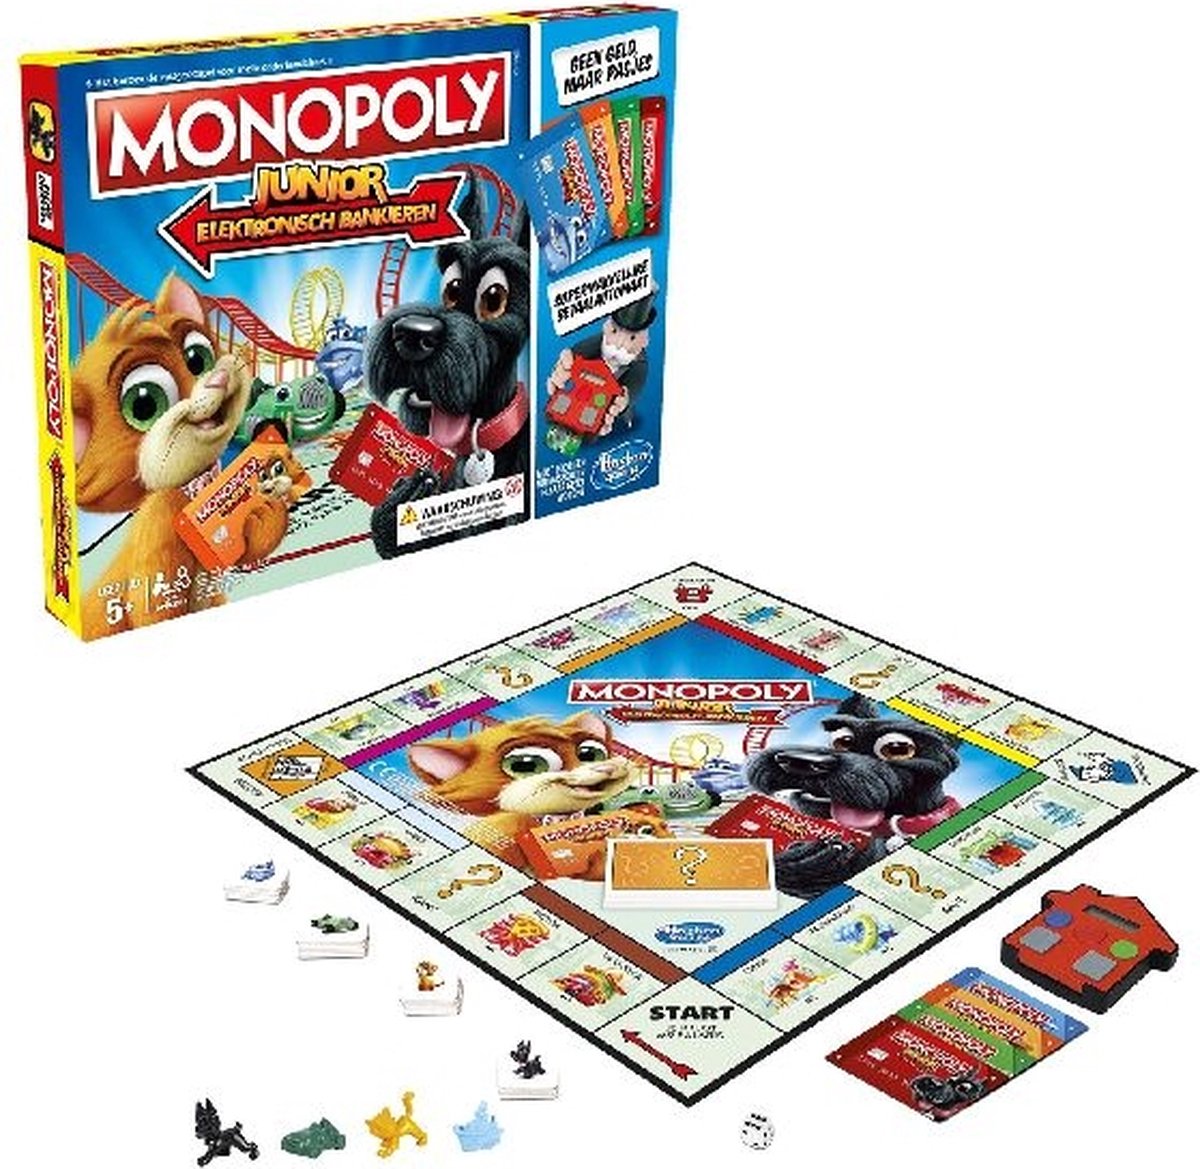 Monopoly Junior Electronisch Bankieren - Monopoly